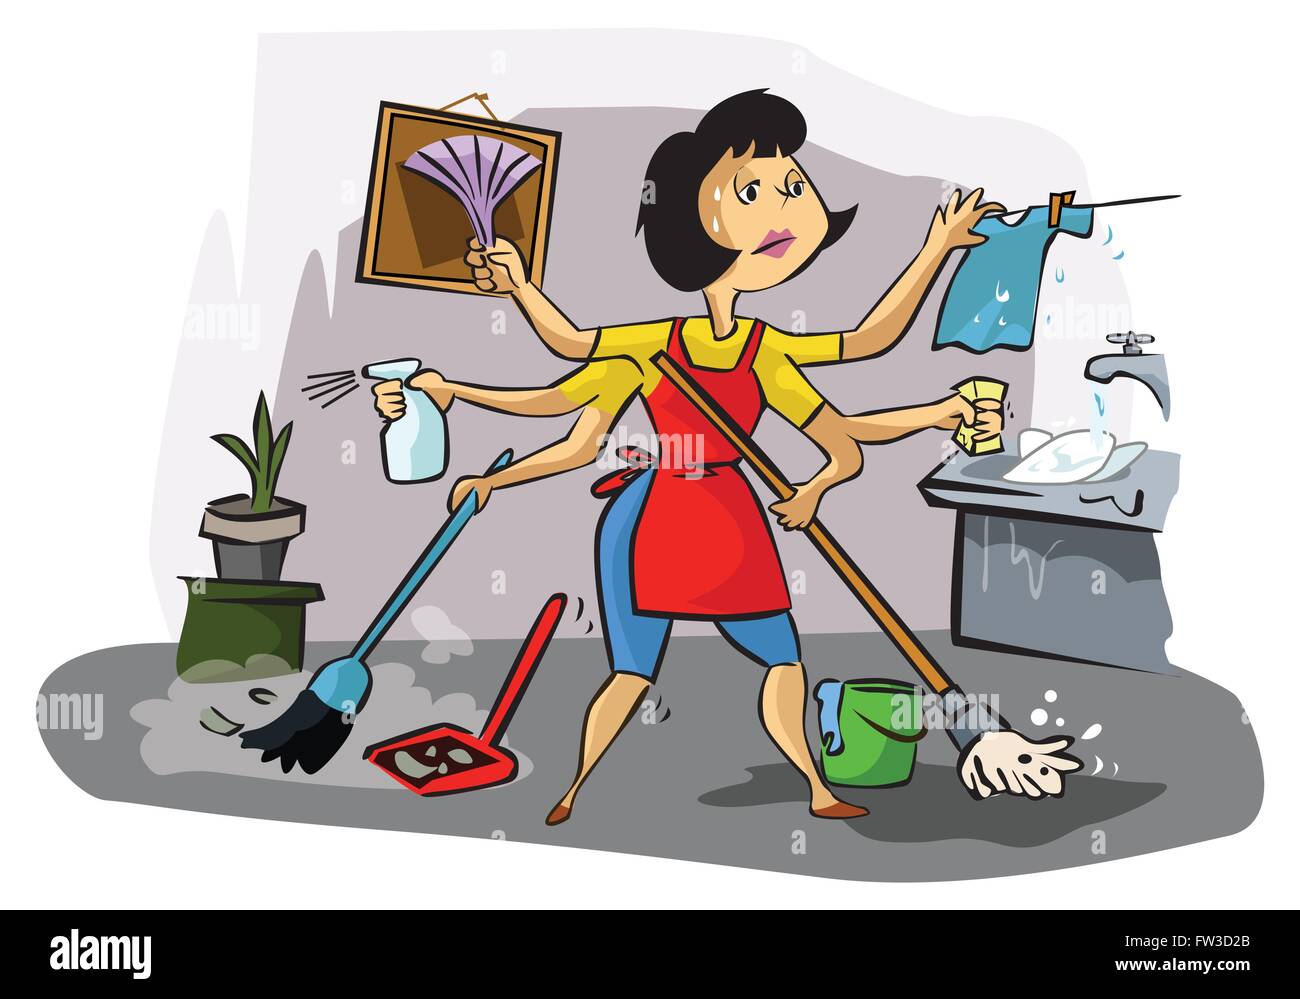 Алиса включи уборку. Стирка уборка готовка. Домохозяйка иллюстрация. Женщина уборка. Женщина вся в домашних делах.